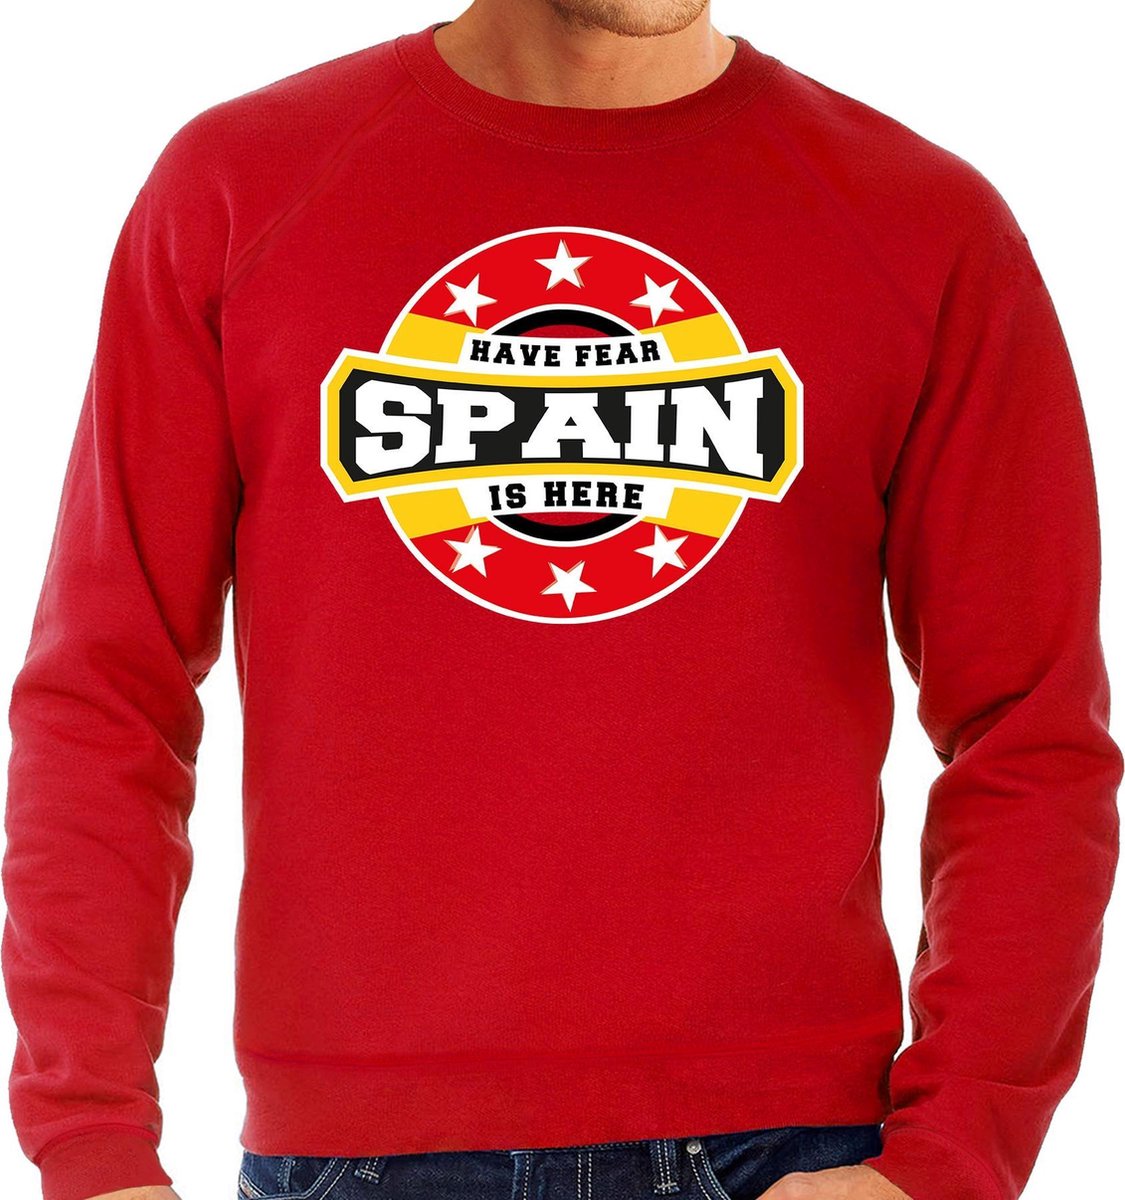 Have fear Spain is here sweater met sterren embleem in de kleuren van de Spaanse vlag - rood - heren - Spanje supporter / Spaans elftal fan trui / EK / WK / kleding XL